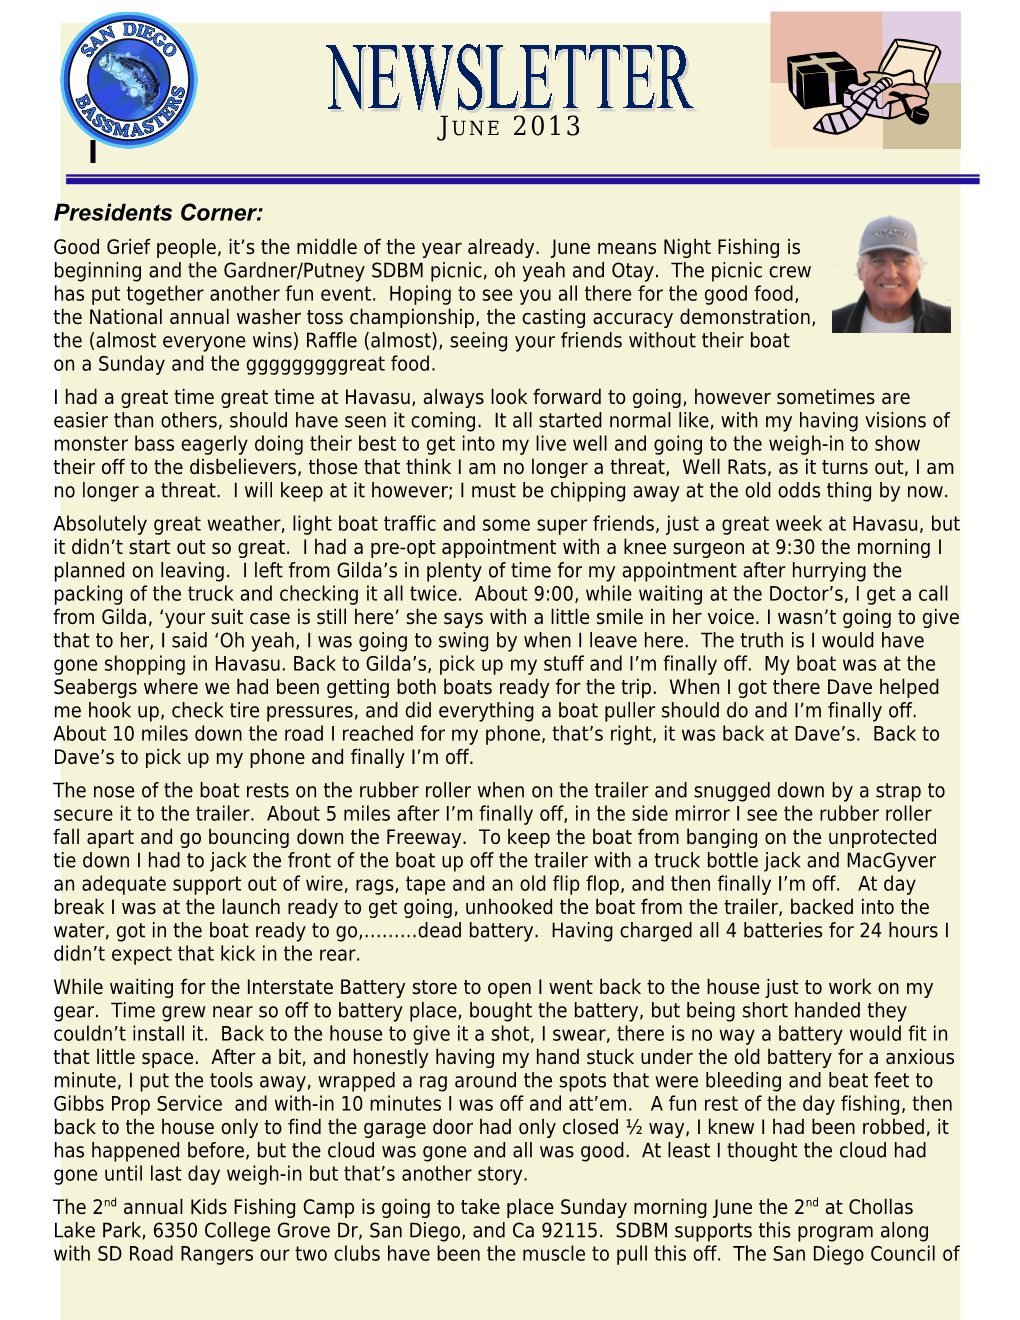 SAN DIEGO BASSMASTERS Page 1 January 2013 s3